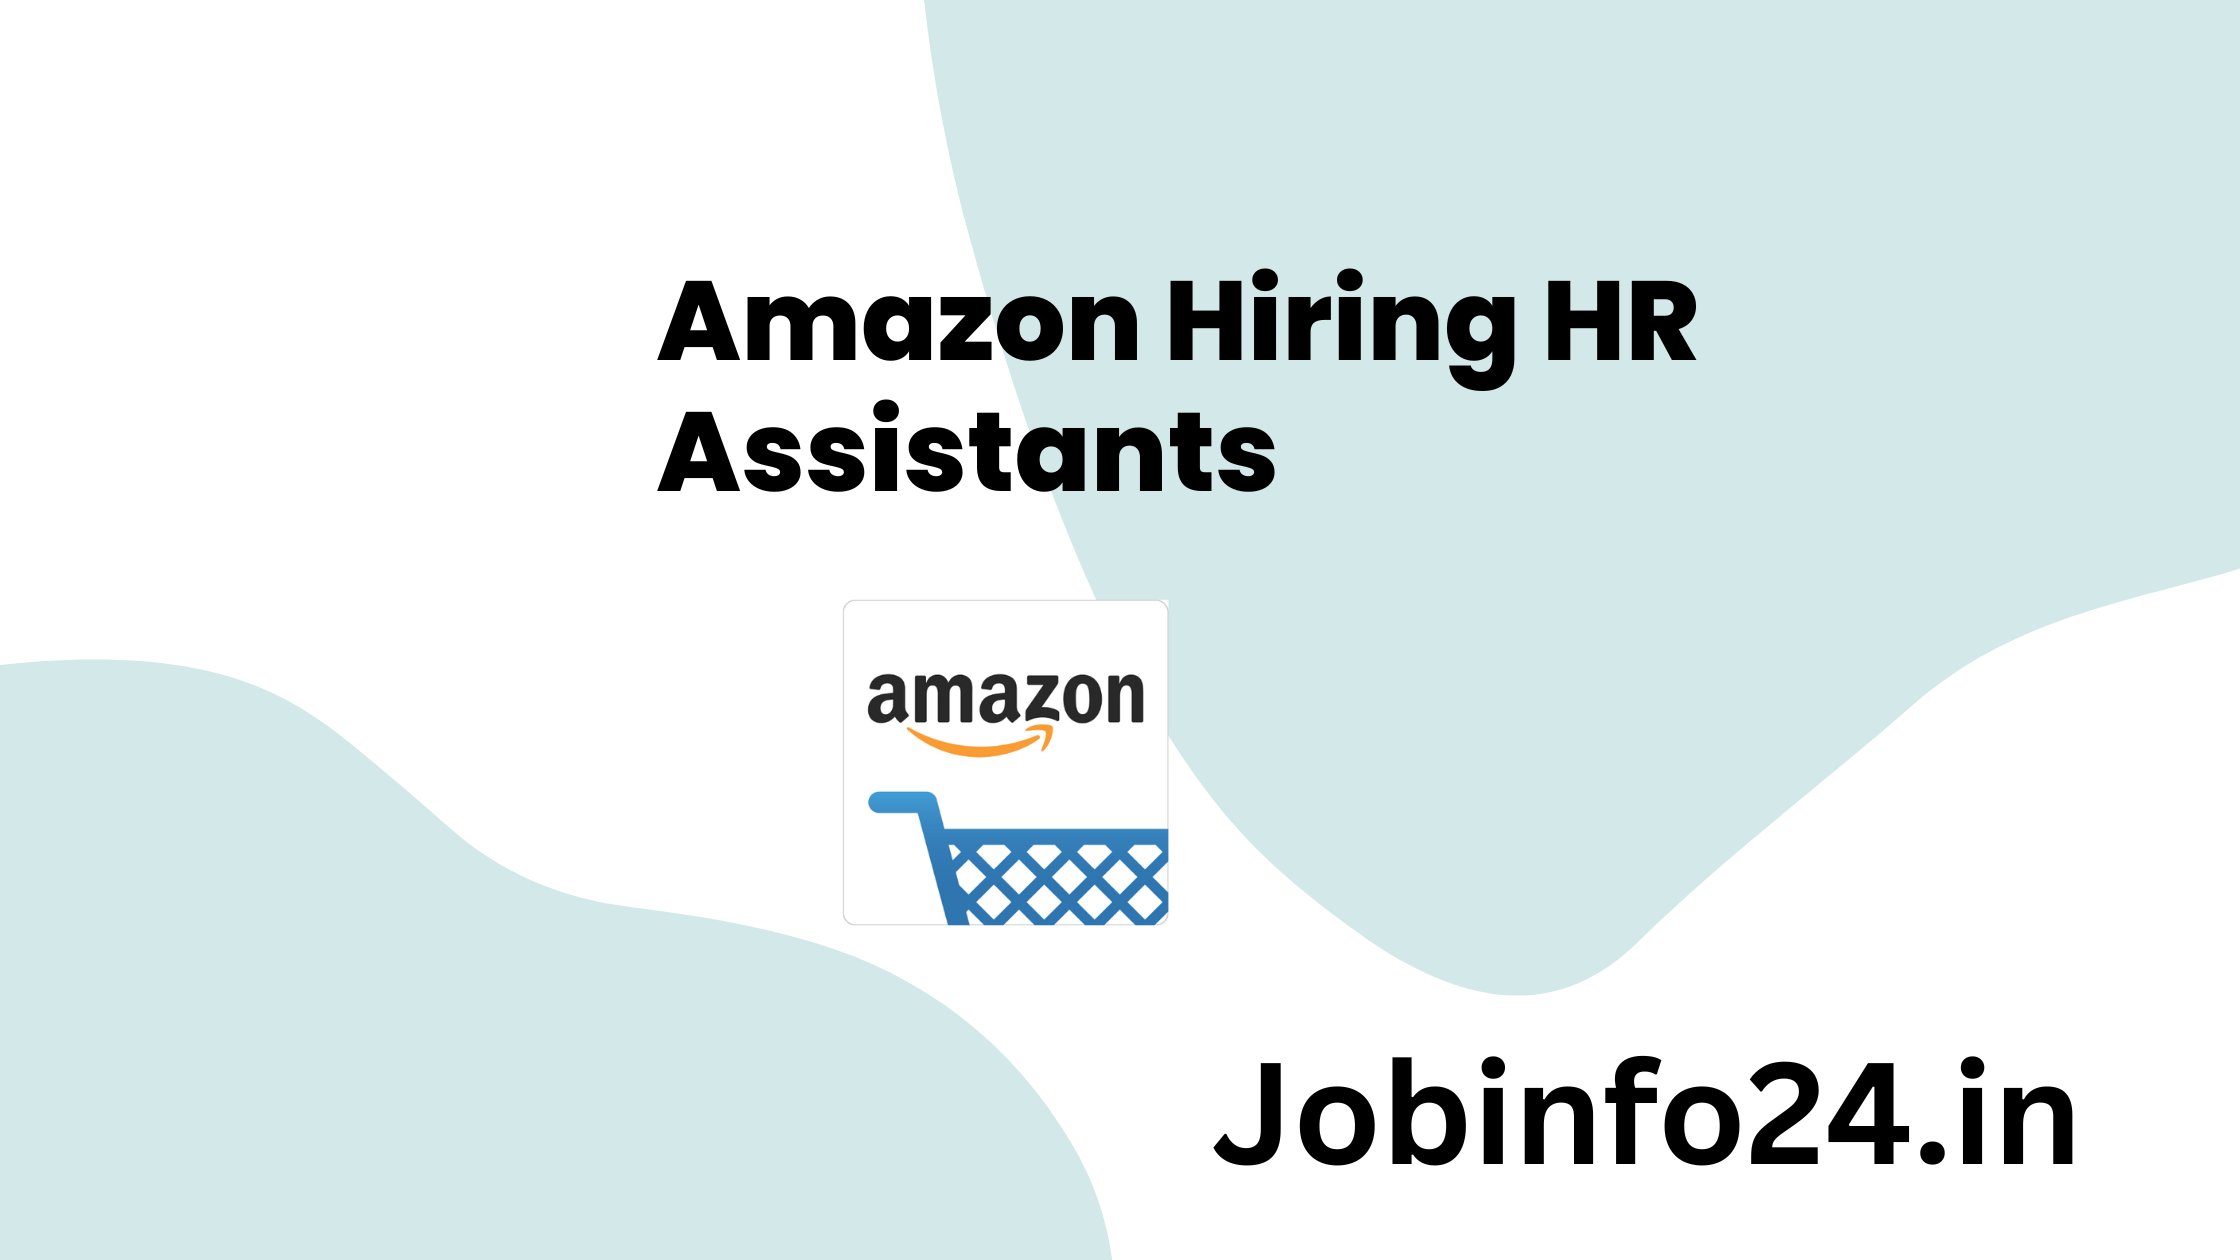 Amazon Hiring HR Assistants